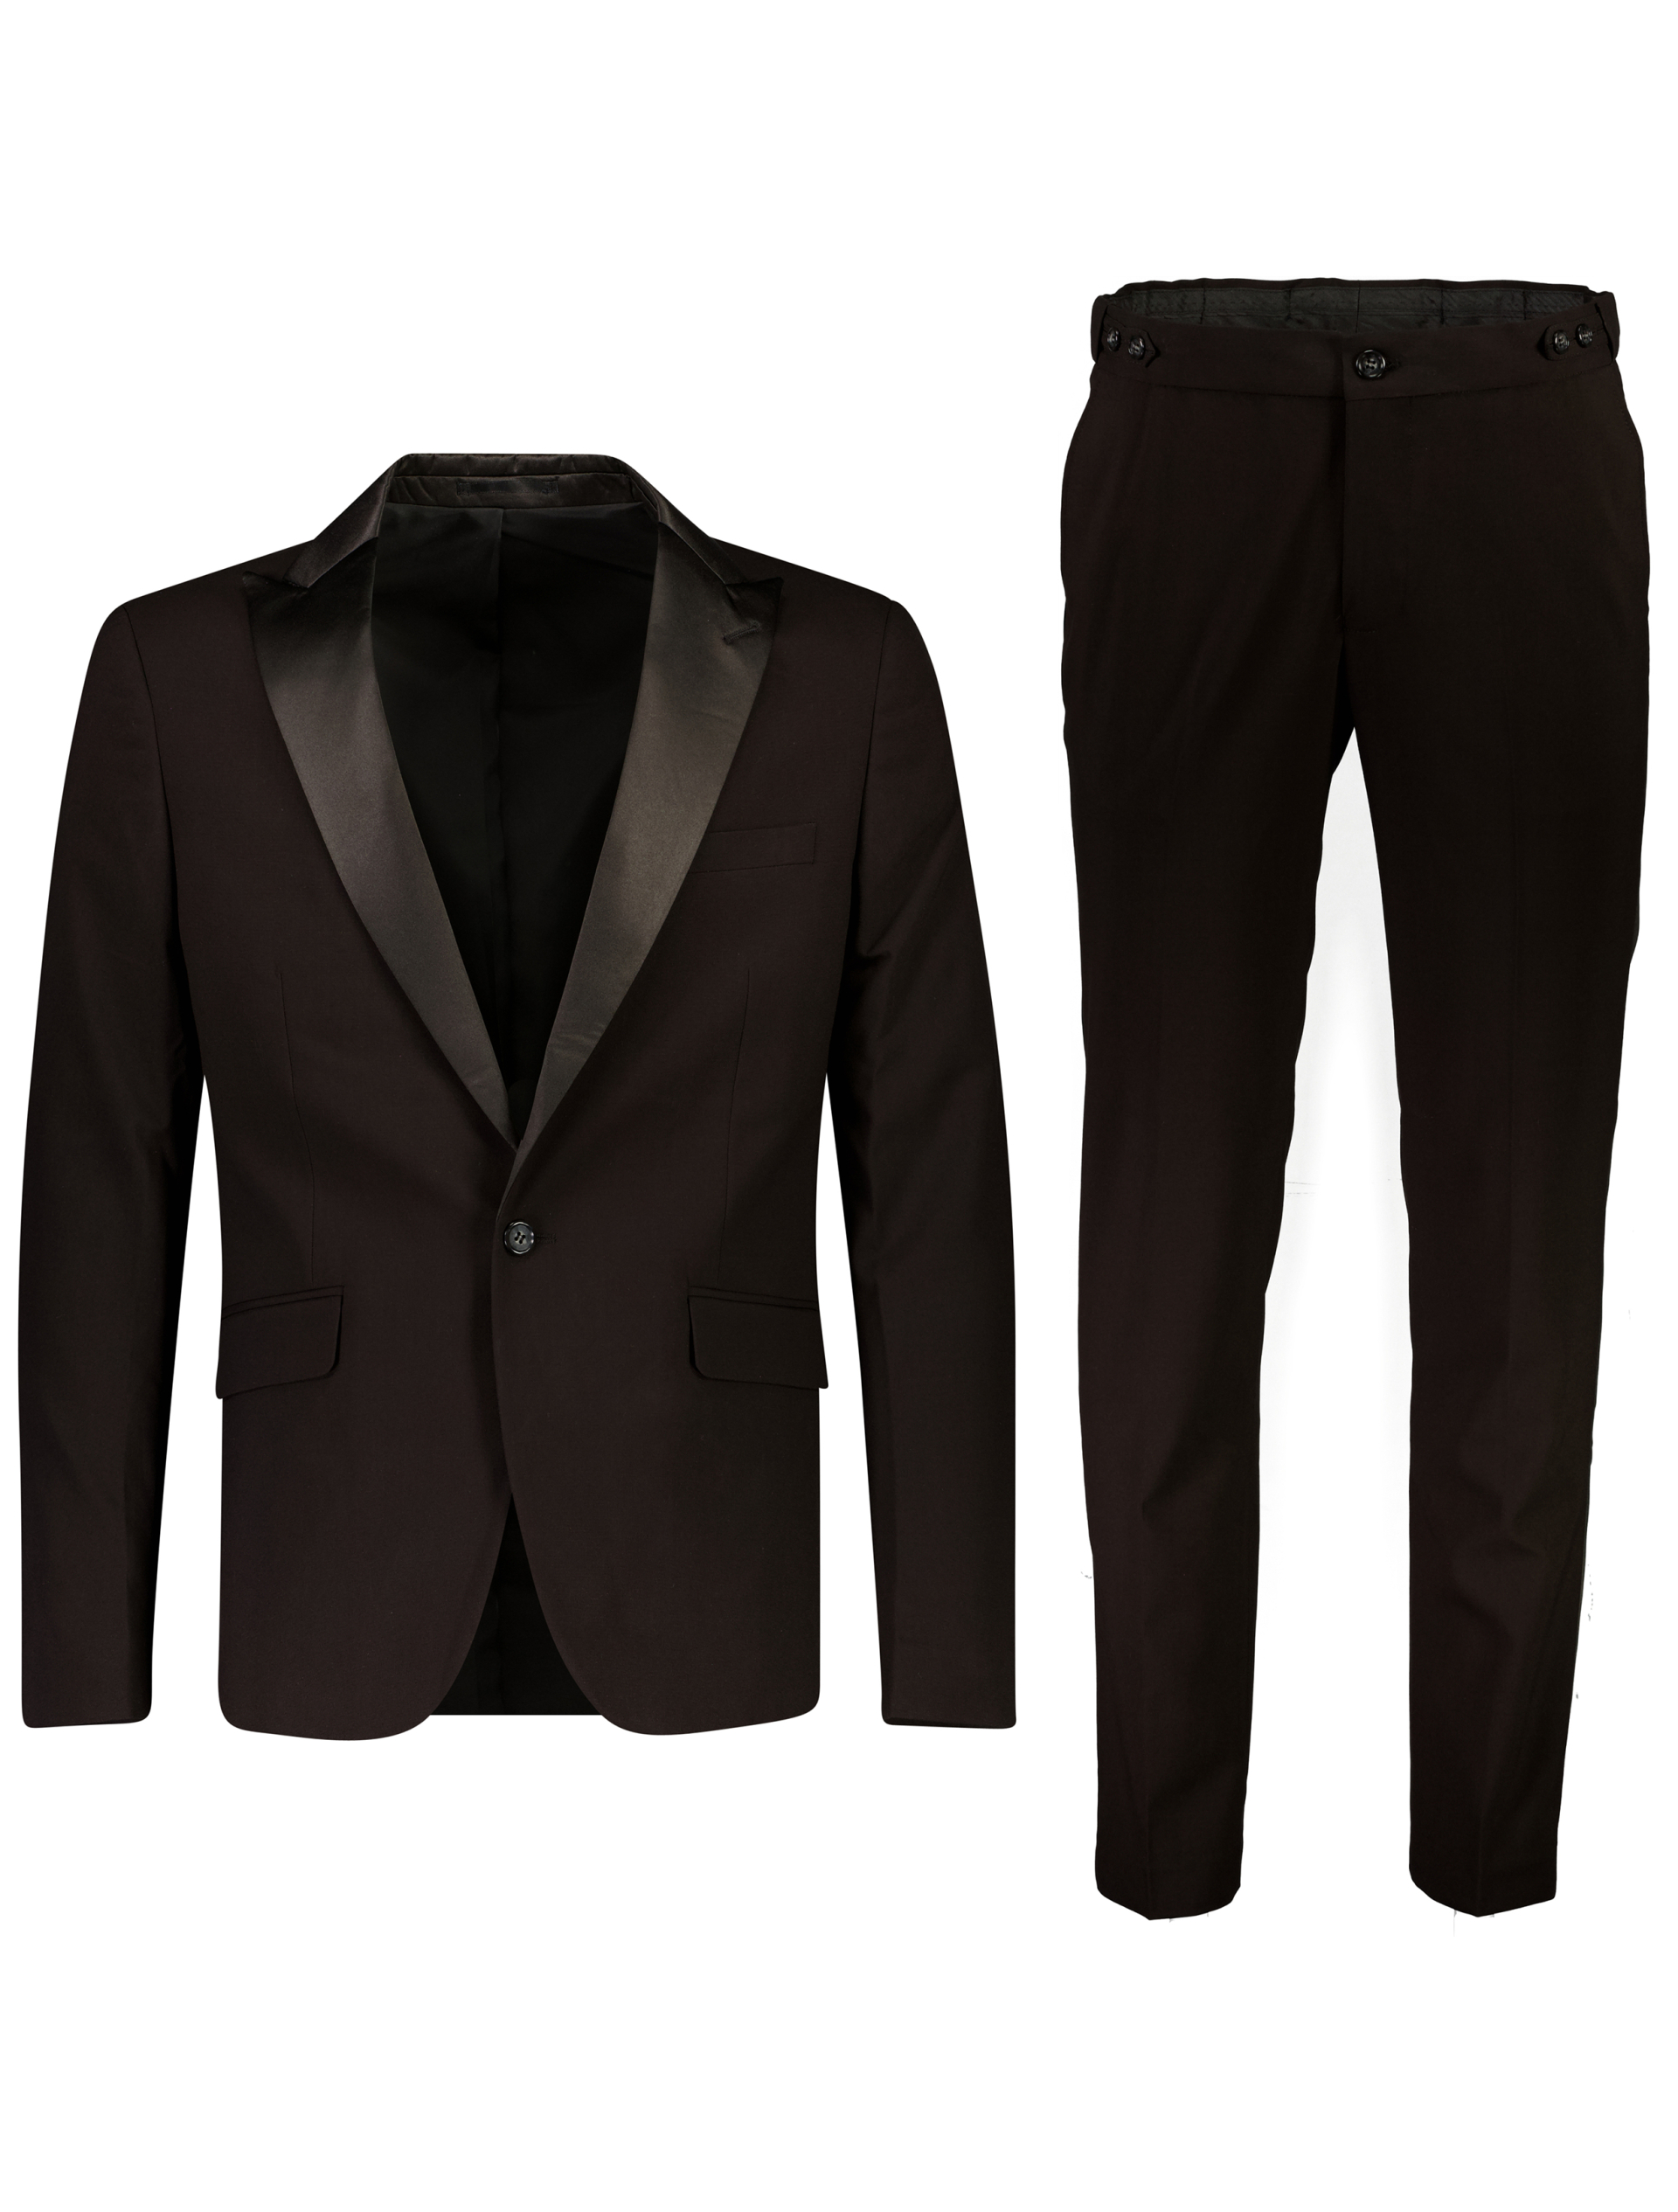 Lindbergh Suit black / black